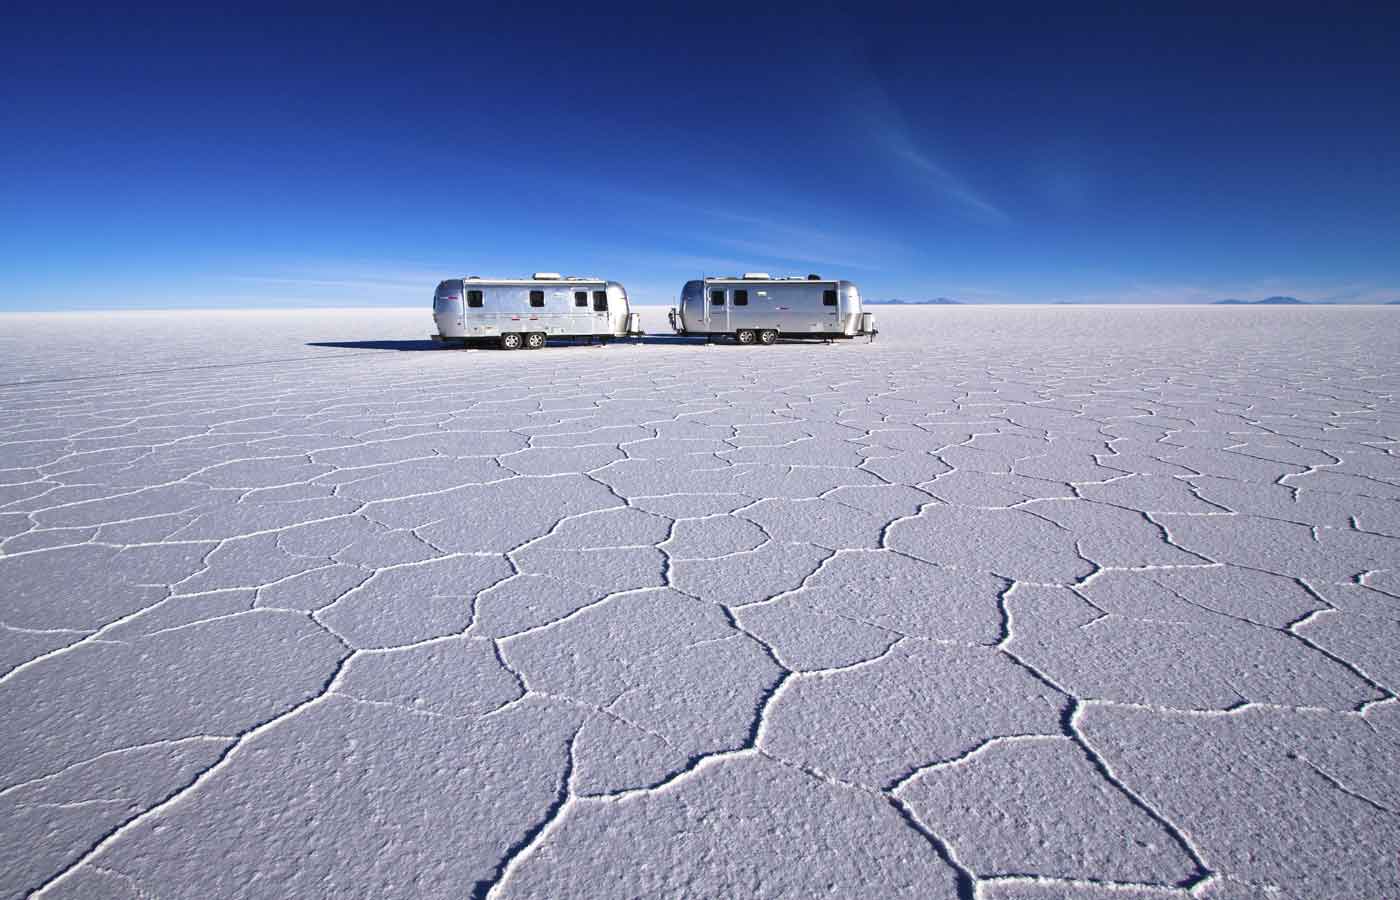 Deluxe Airstream Campers, Uyuni Salt Flats, Bolivia